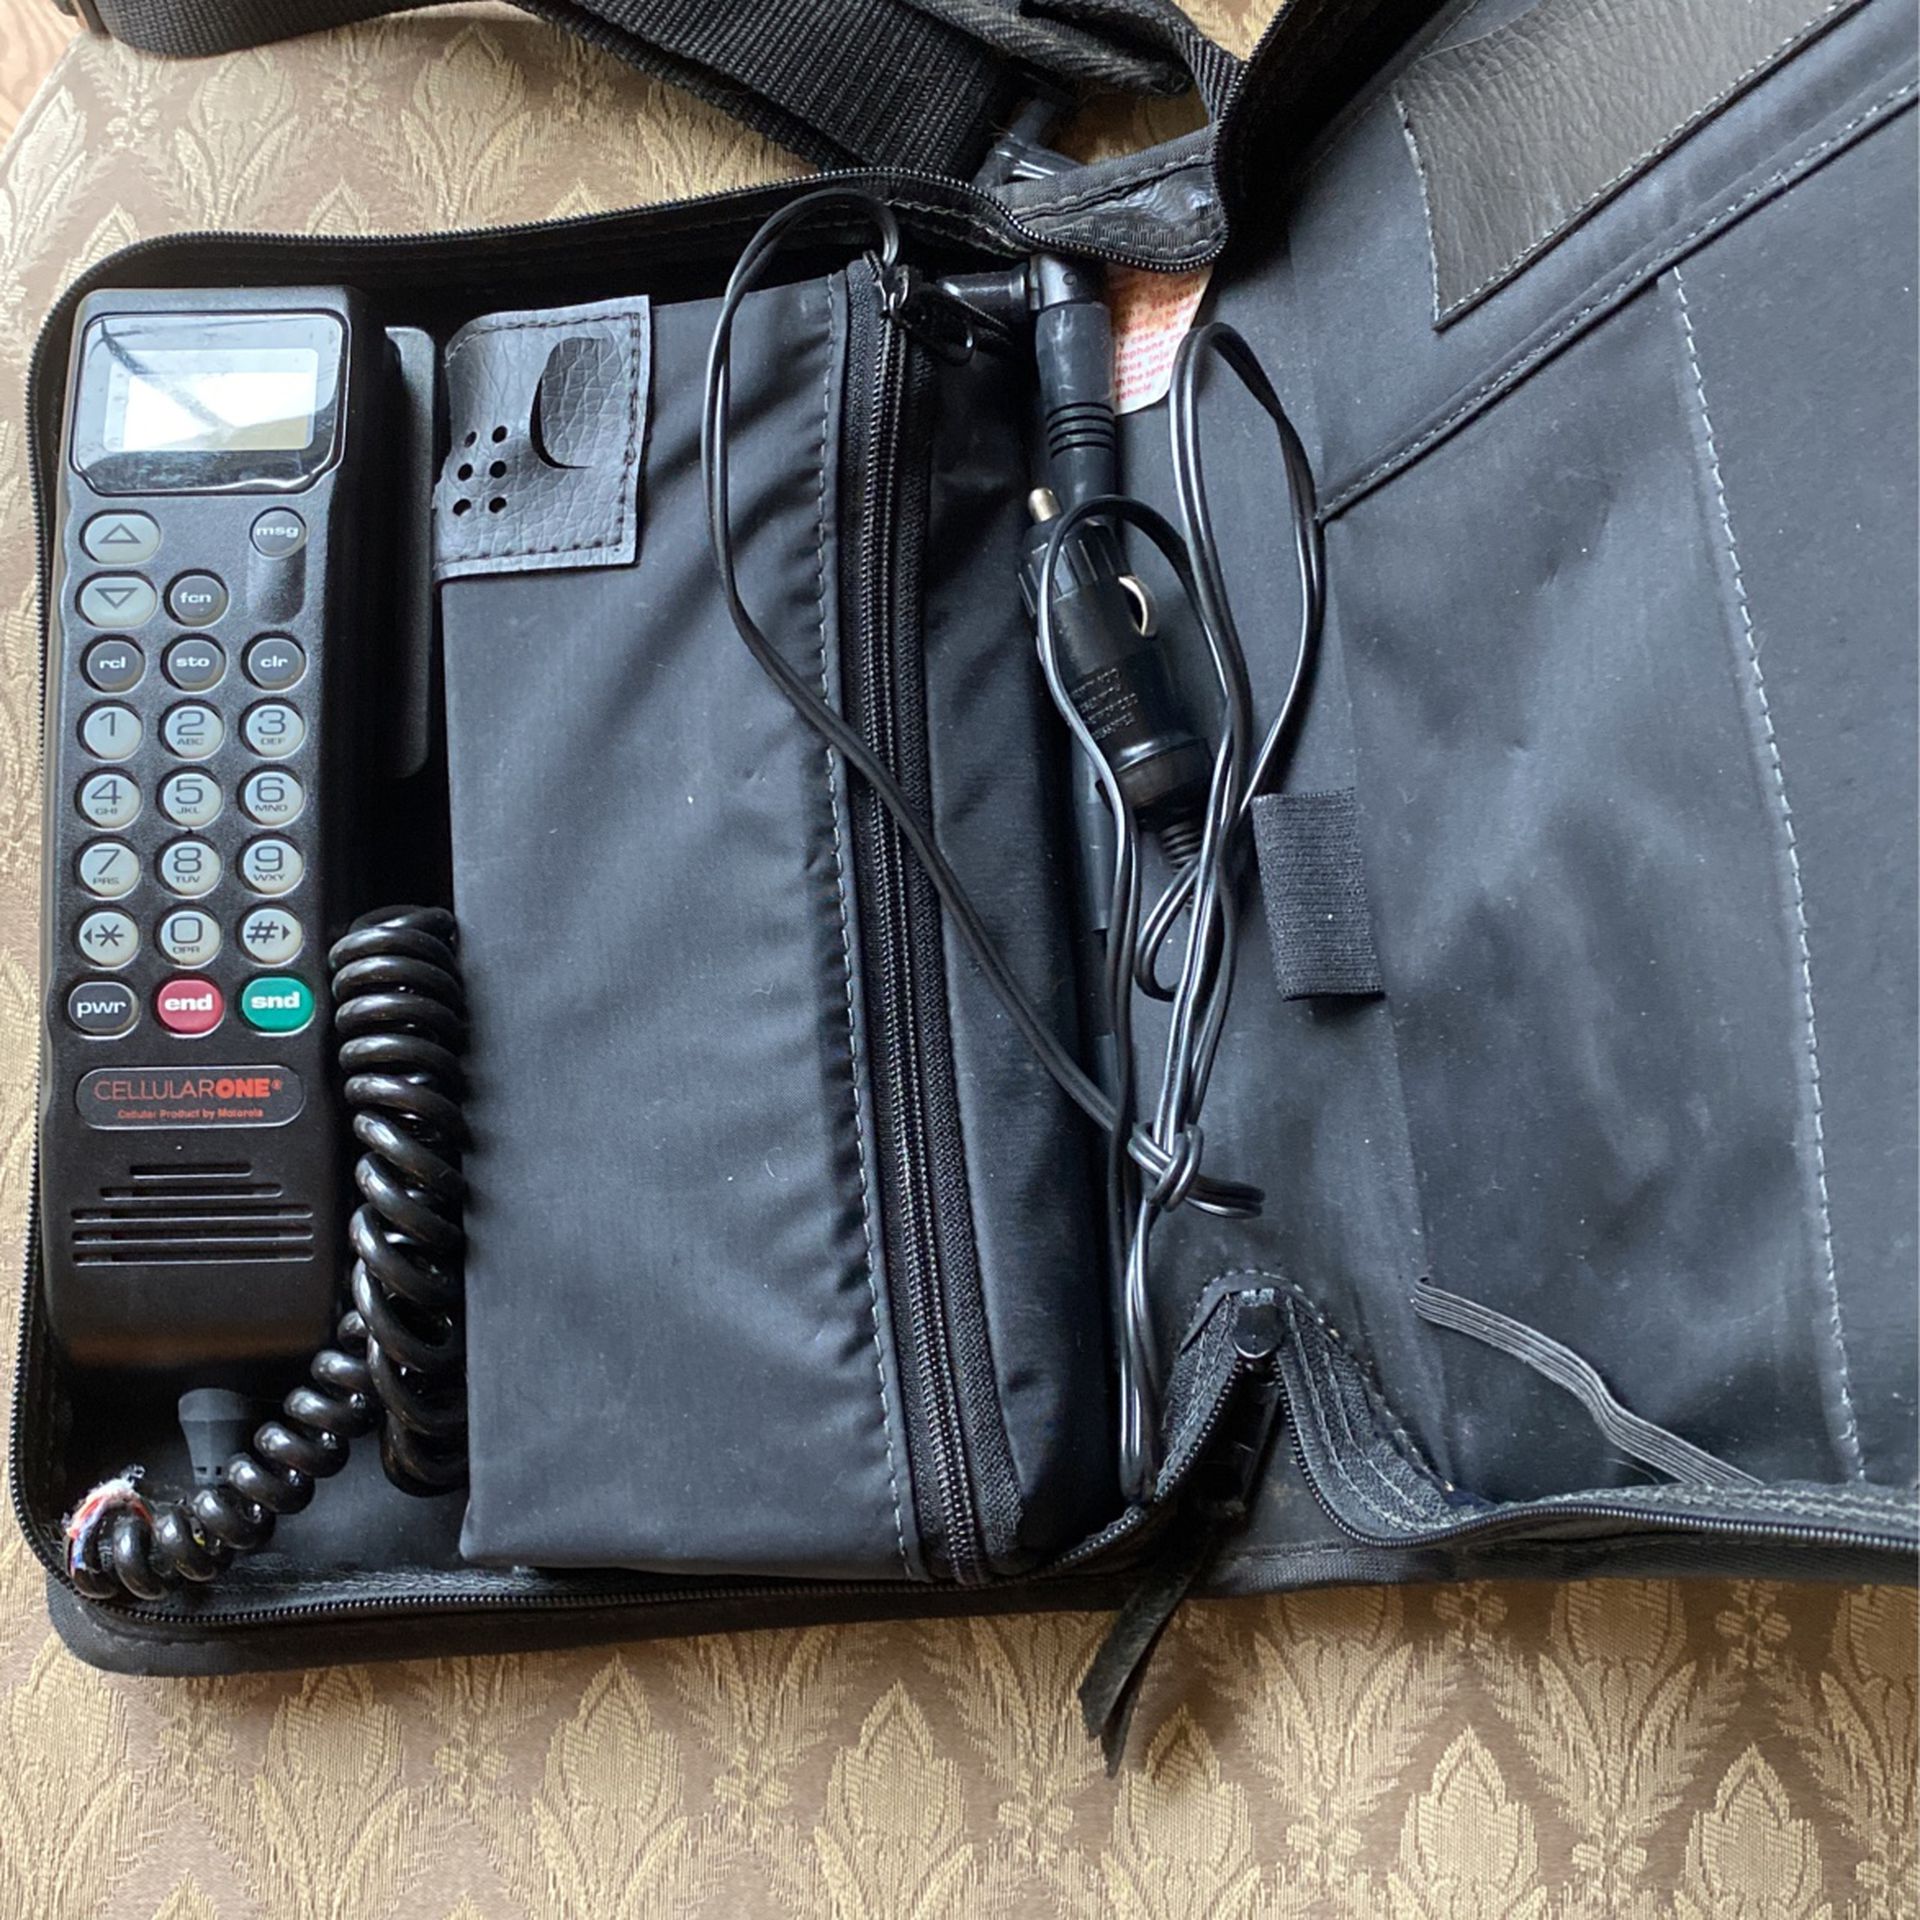 Motorola Bag Phone for Sale in Latrobe, PA - OfferUp